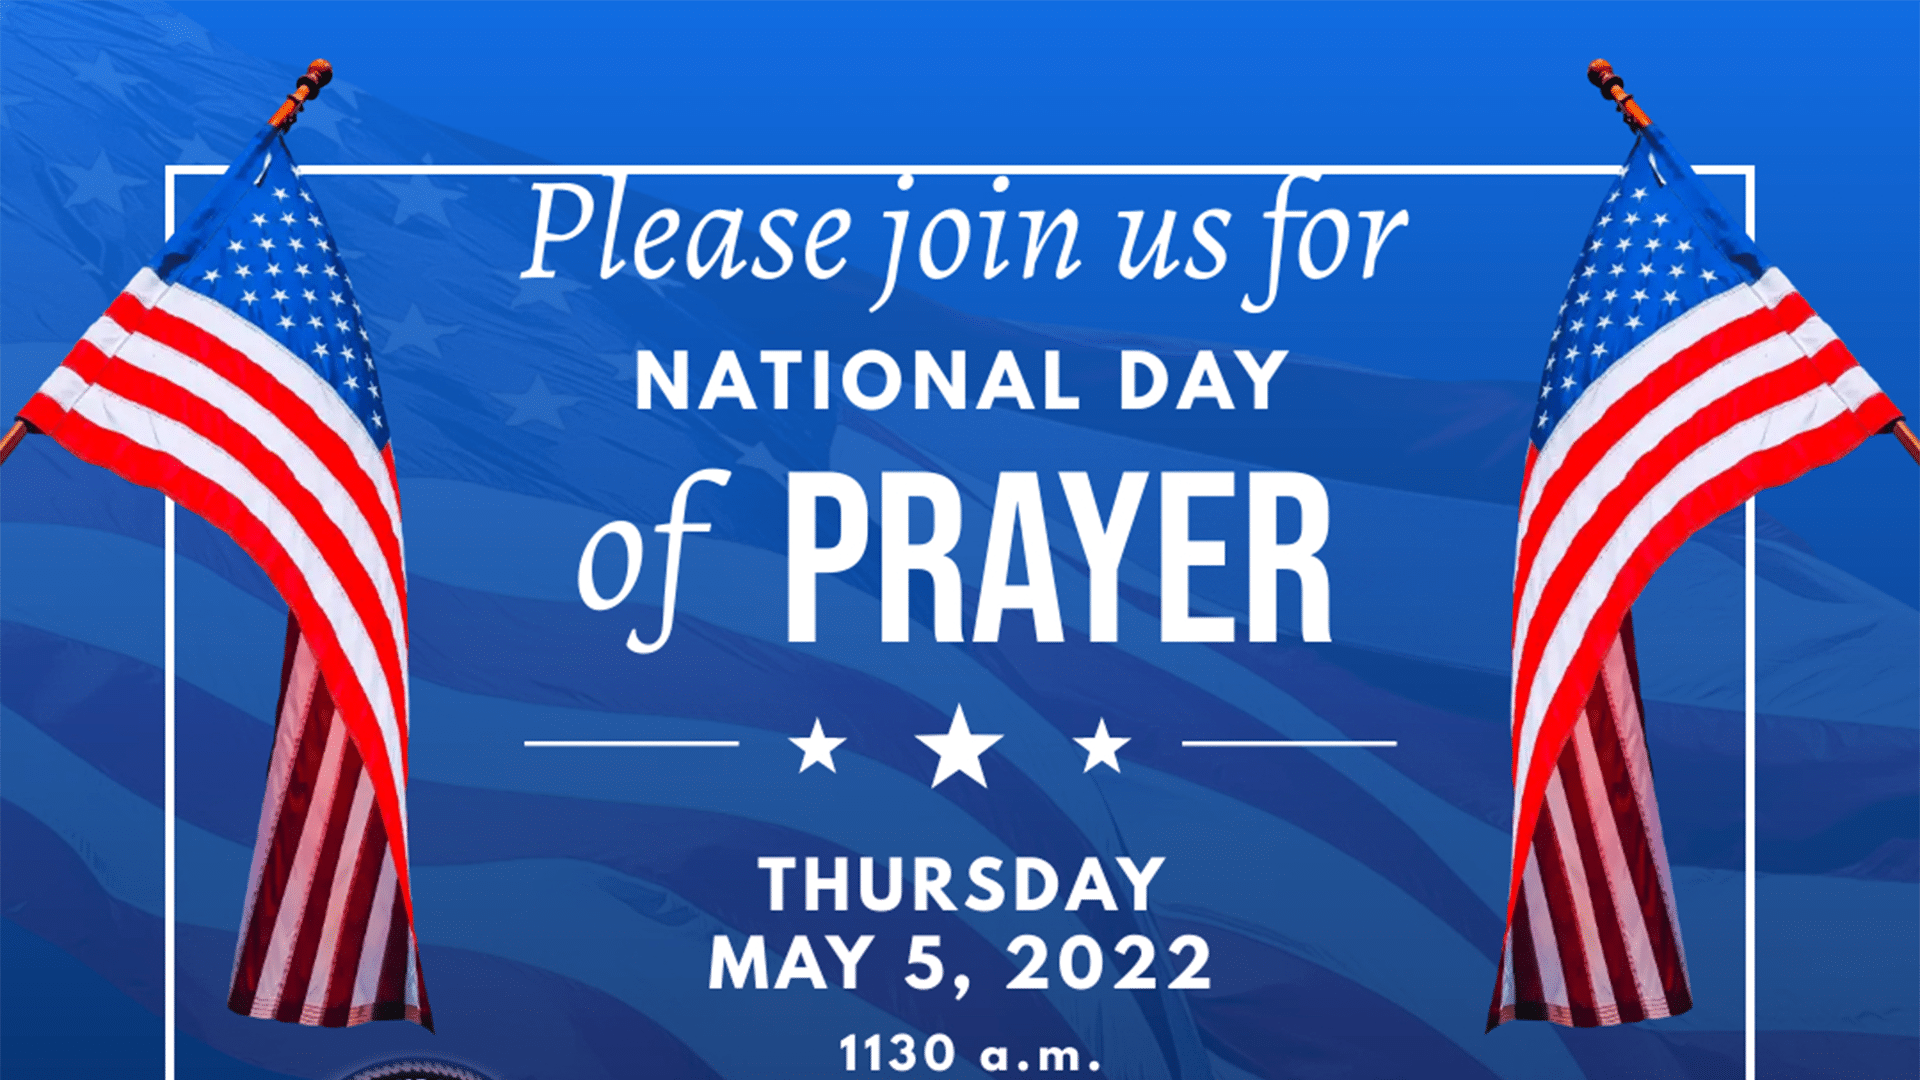 National Day of Prayer flyer